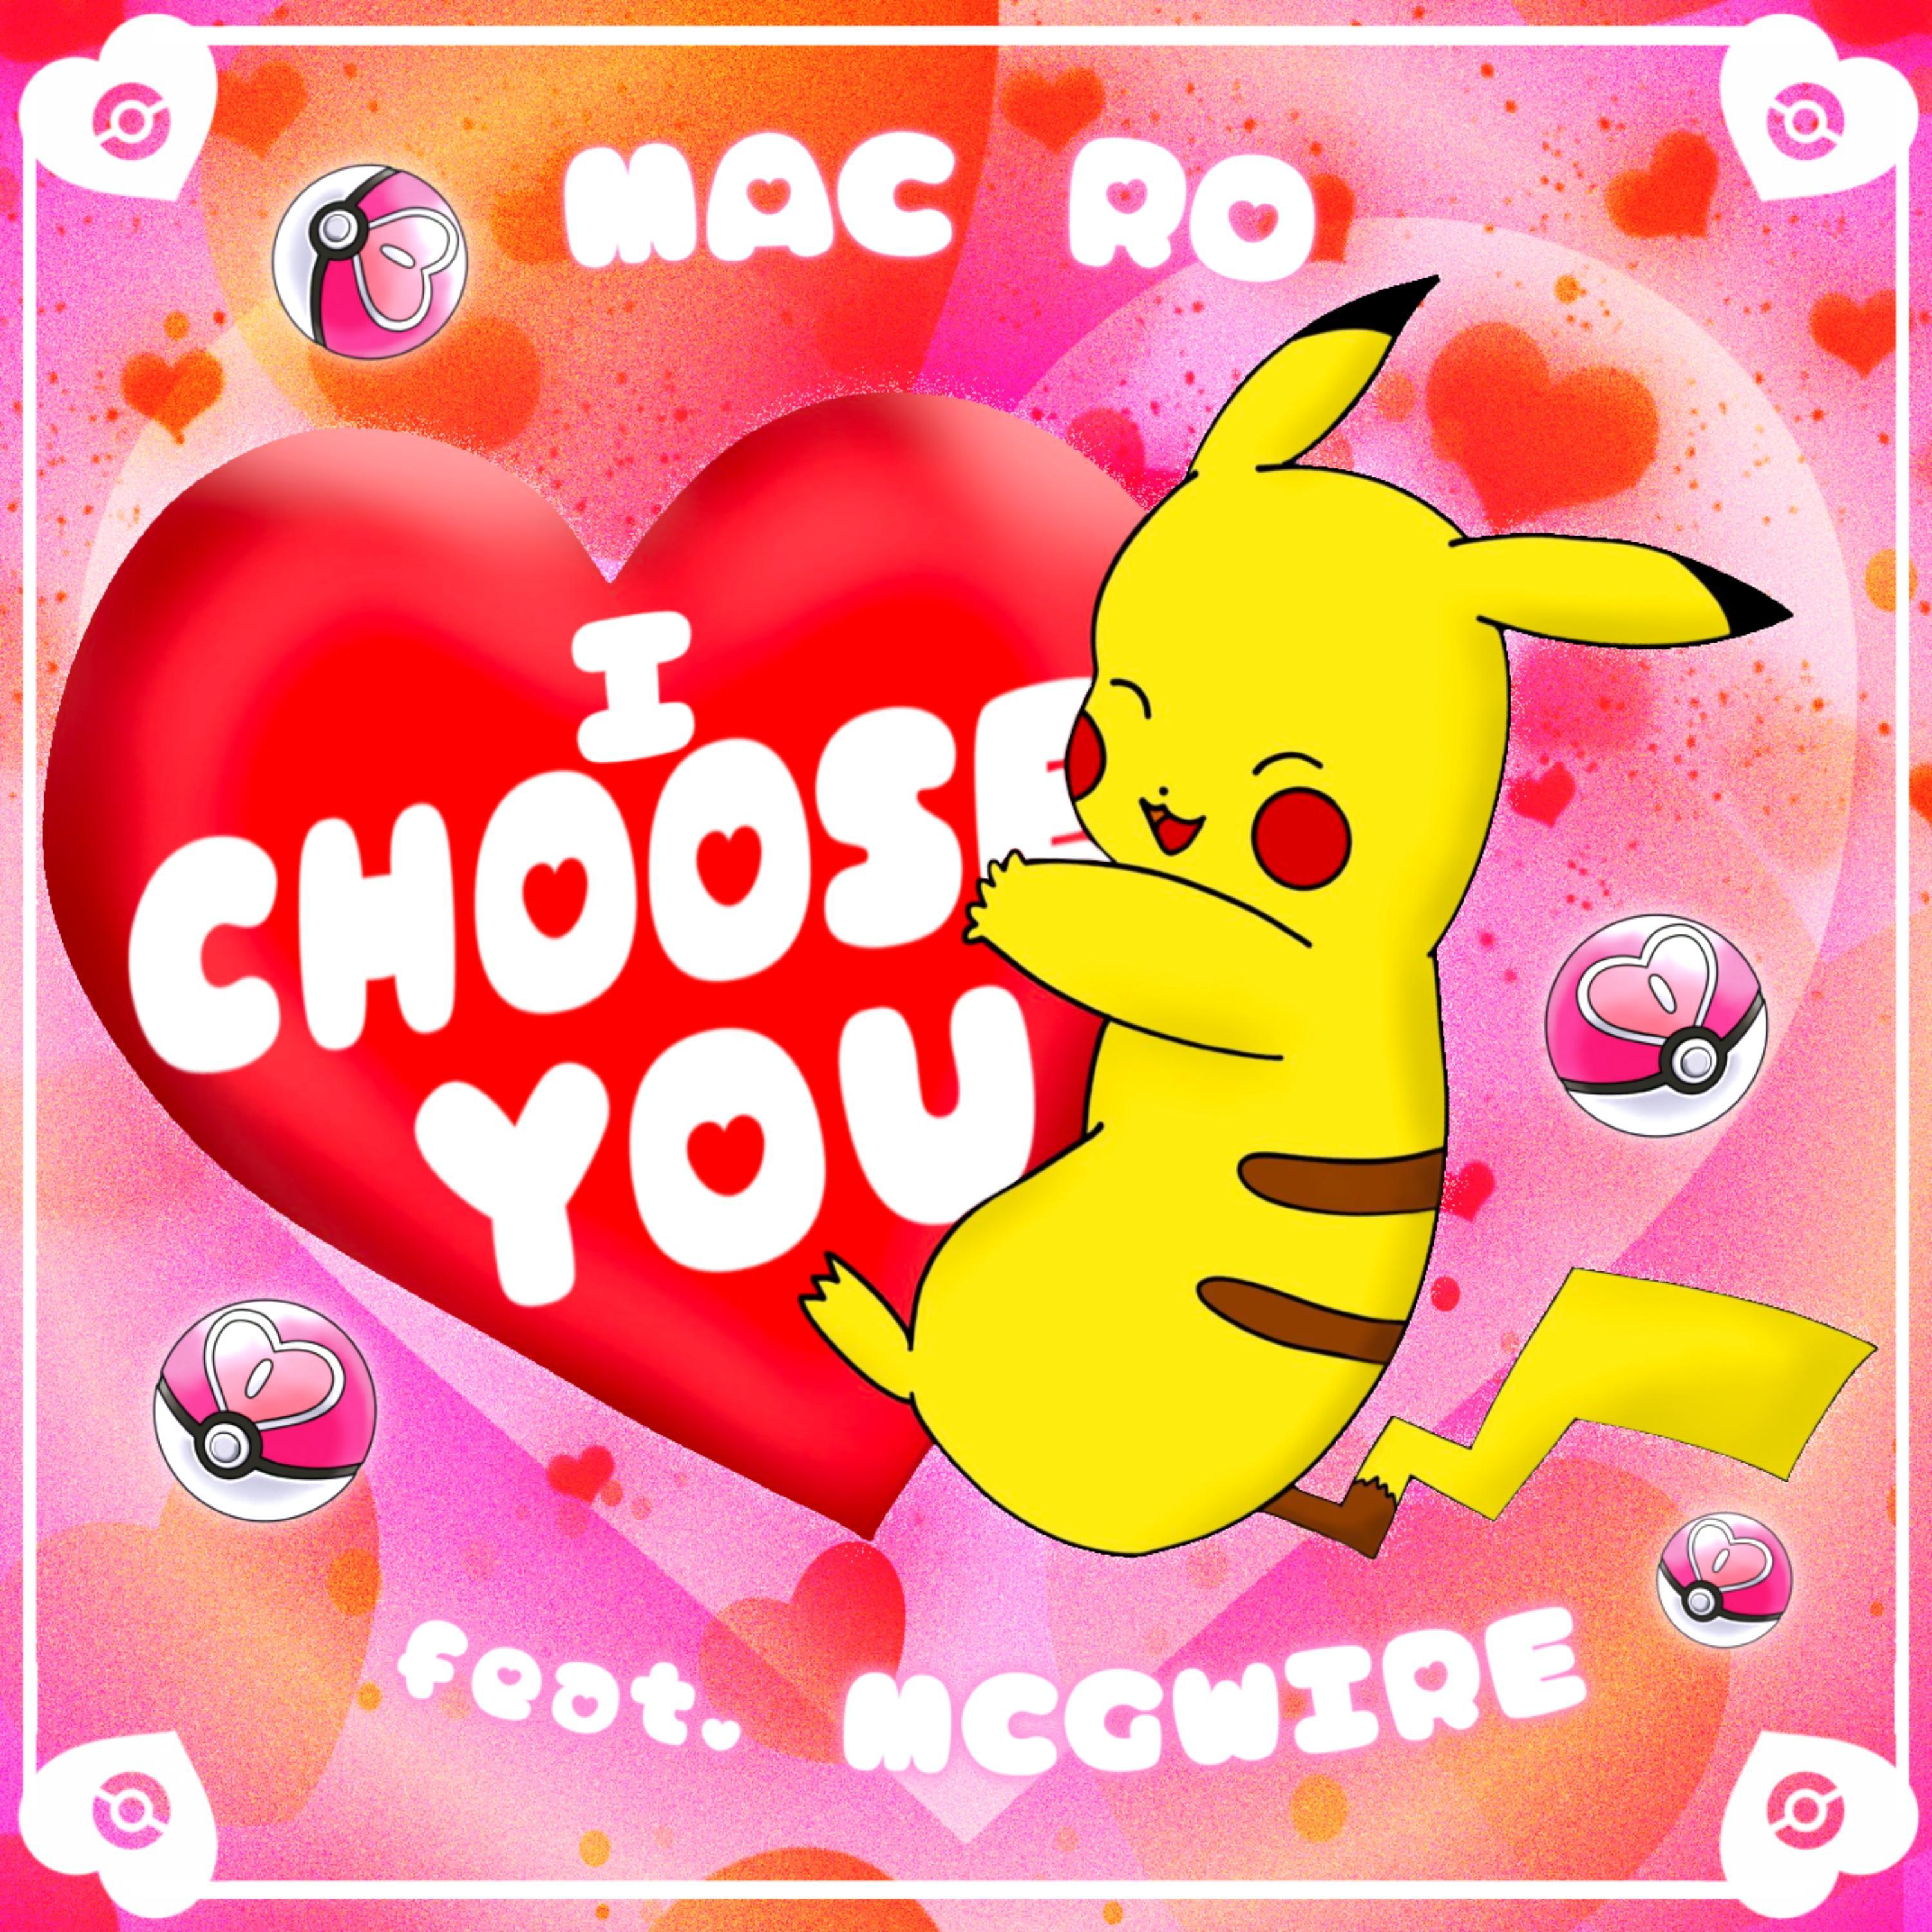 Mac Ro - I Choose You (feat. McGwire)